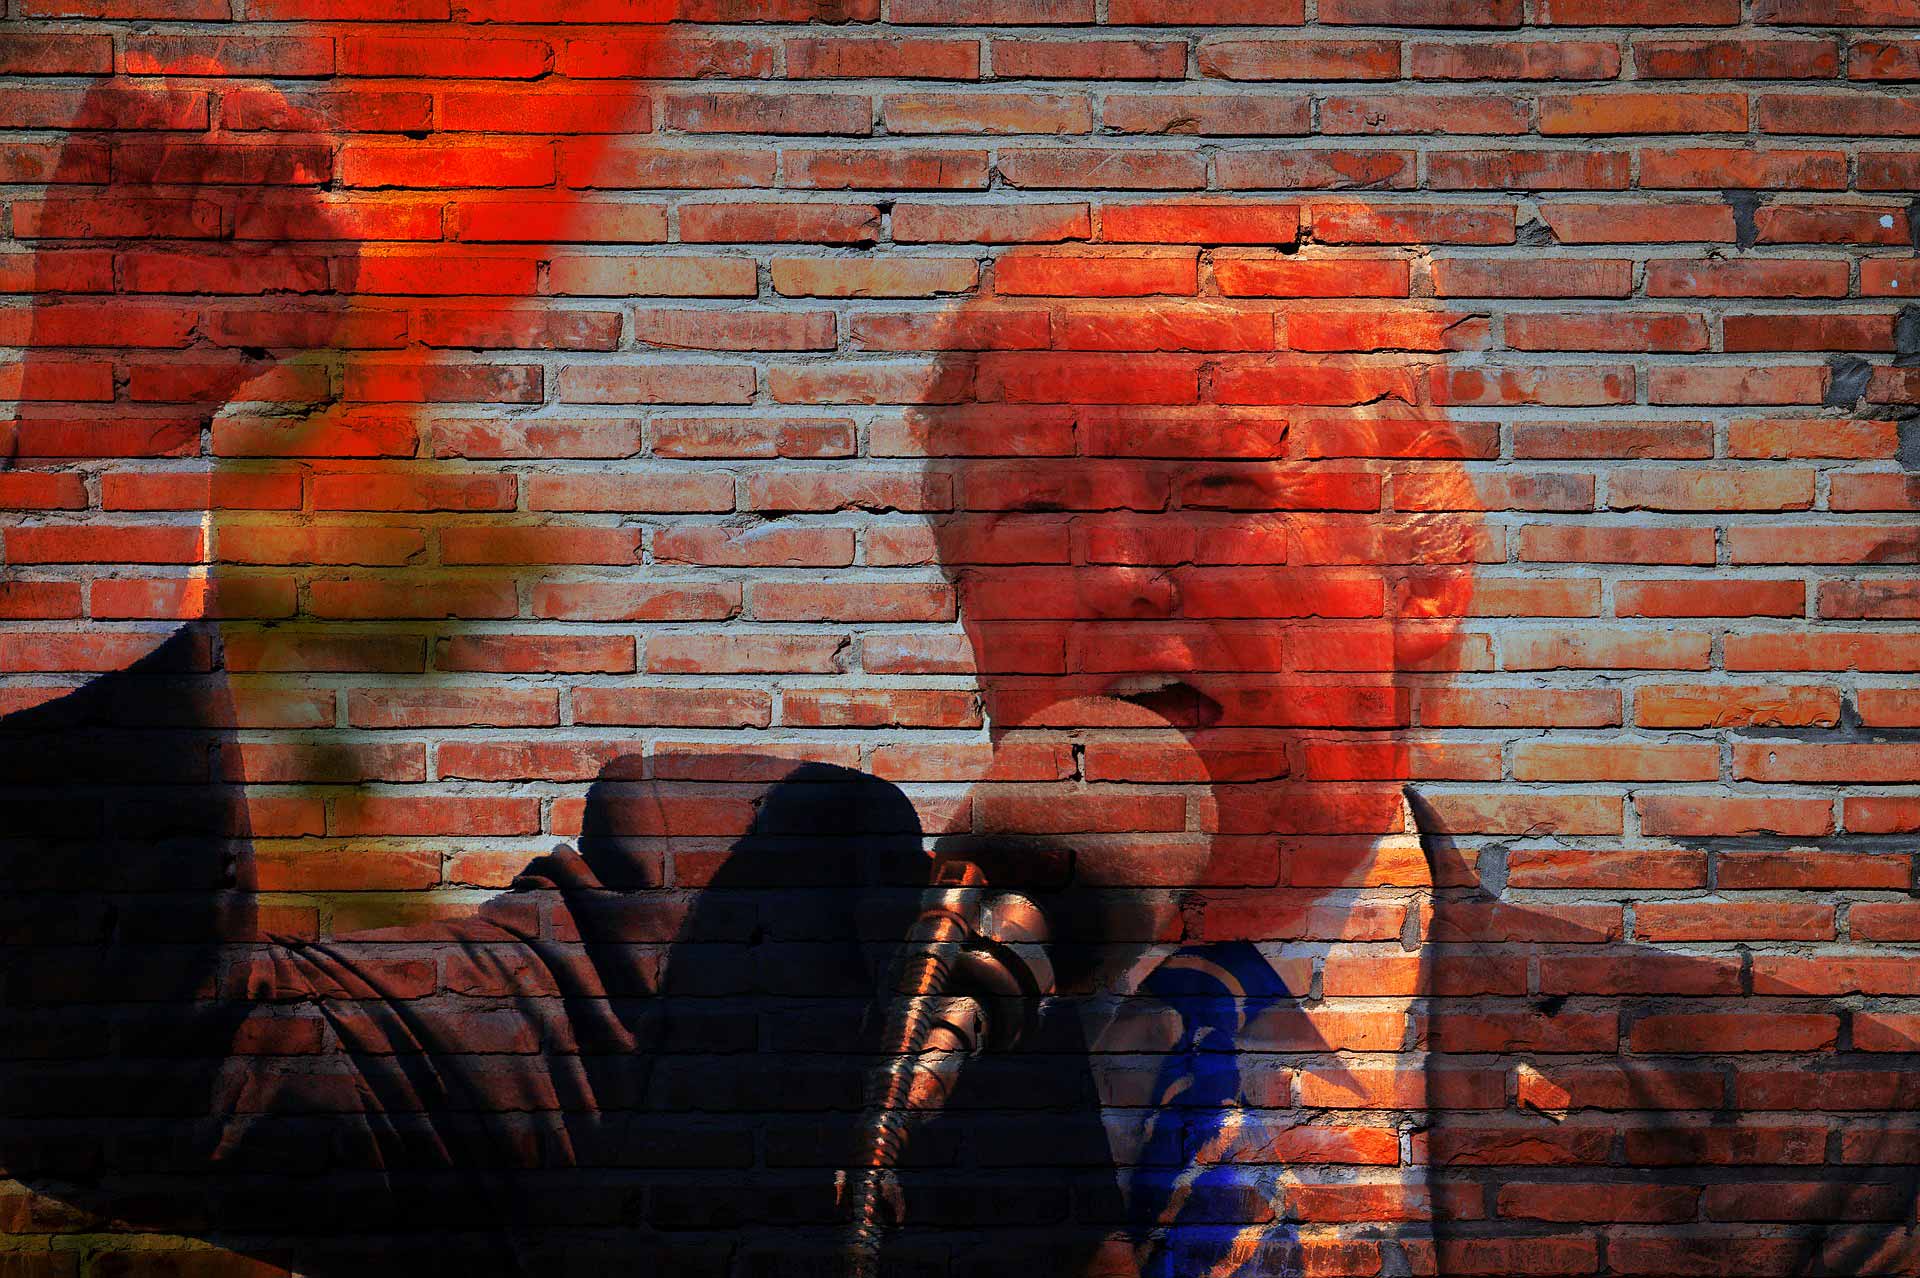 Donald Trump wall